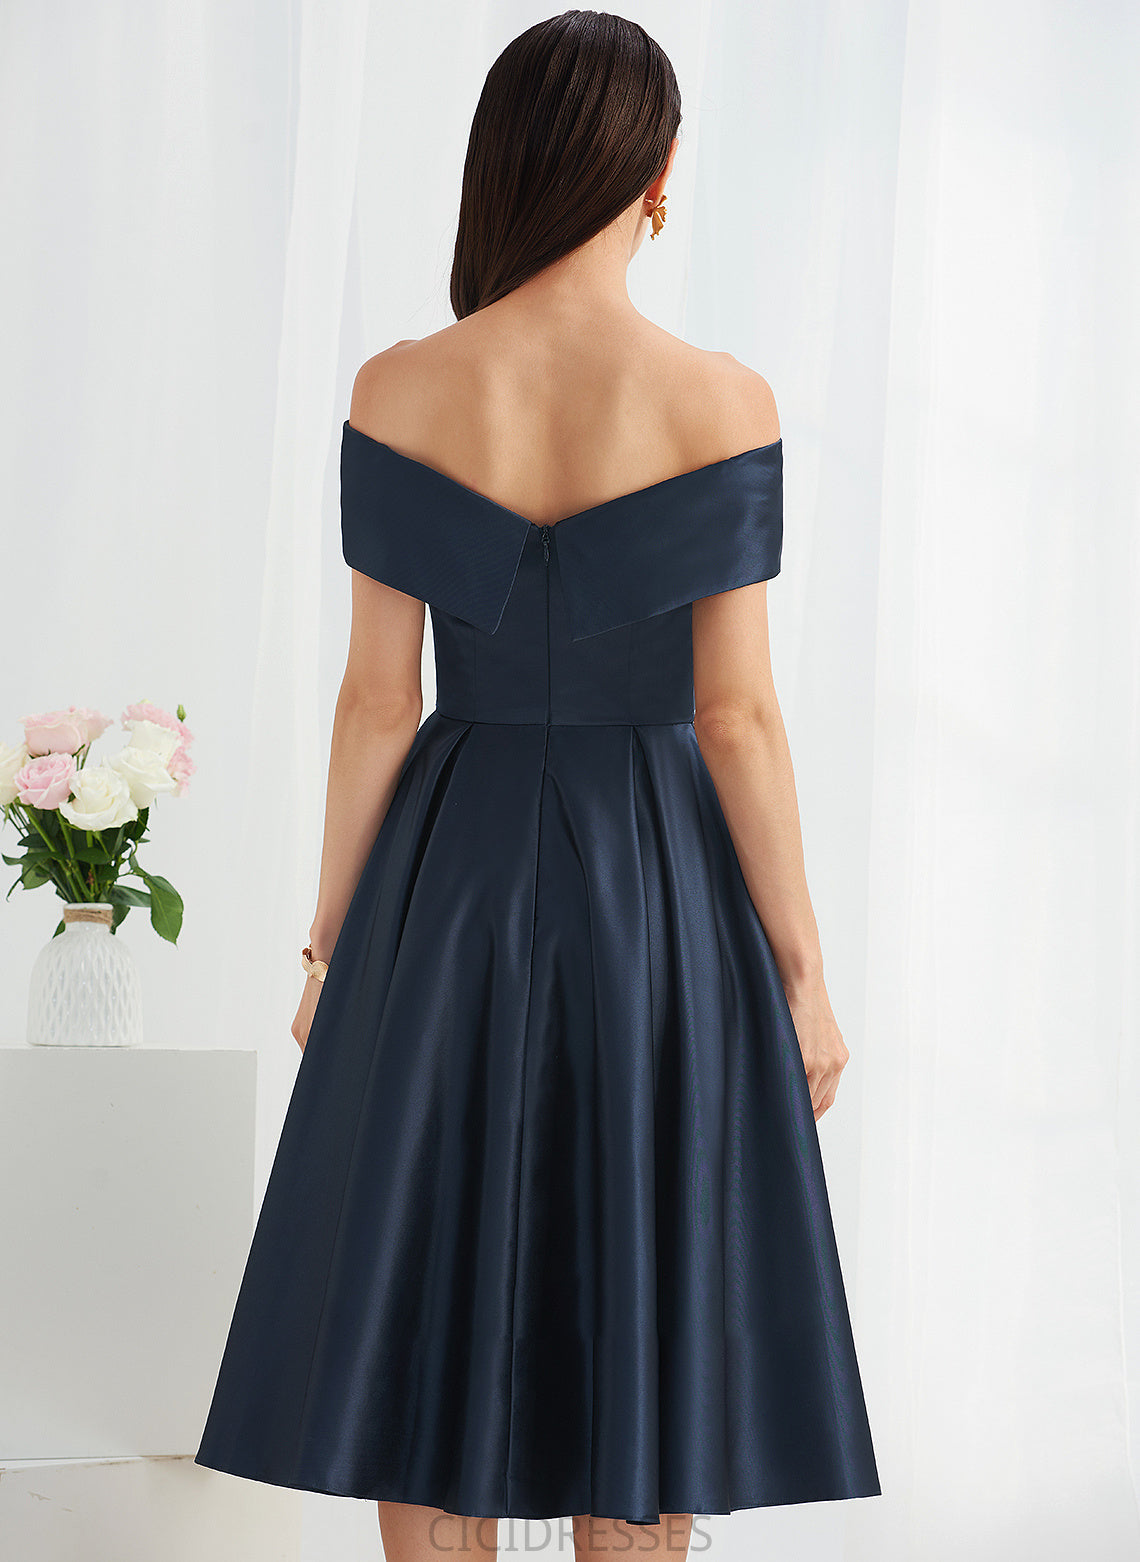 Neckline Embellishment Silhouette Knee-Length Fabric Off-the-Shoulder Pockets Length A-Line Kirsten Floor Length V-Neck Bridesmaid Dresses